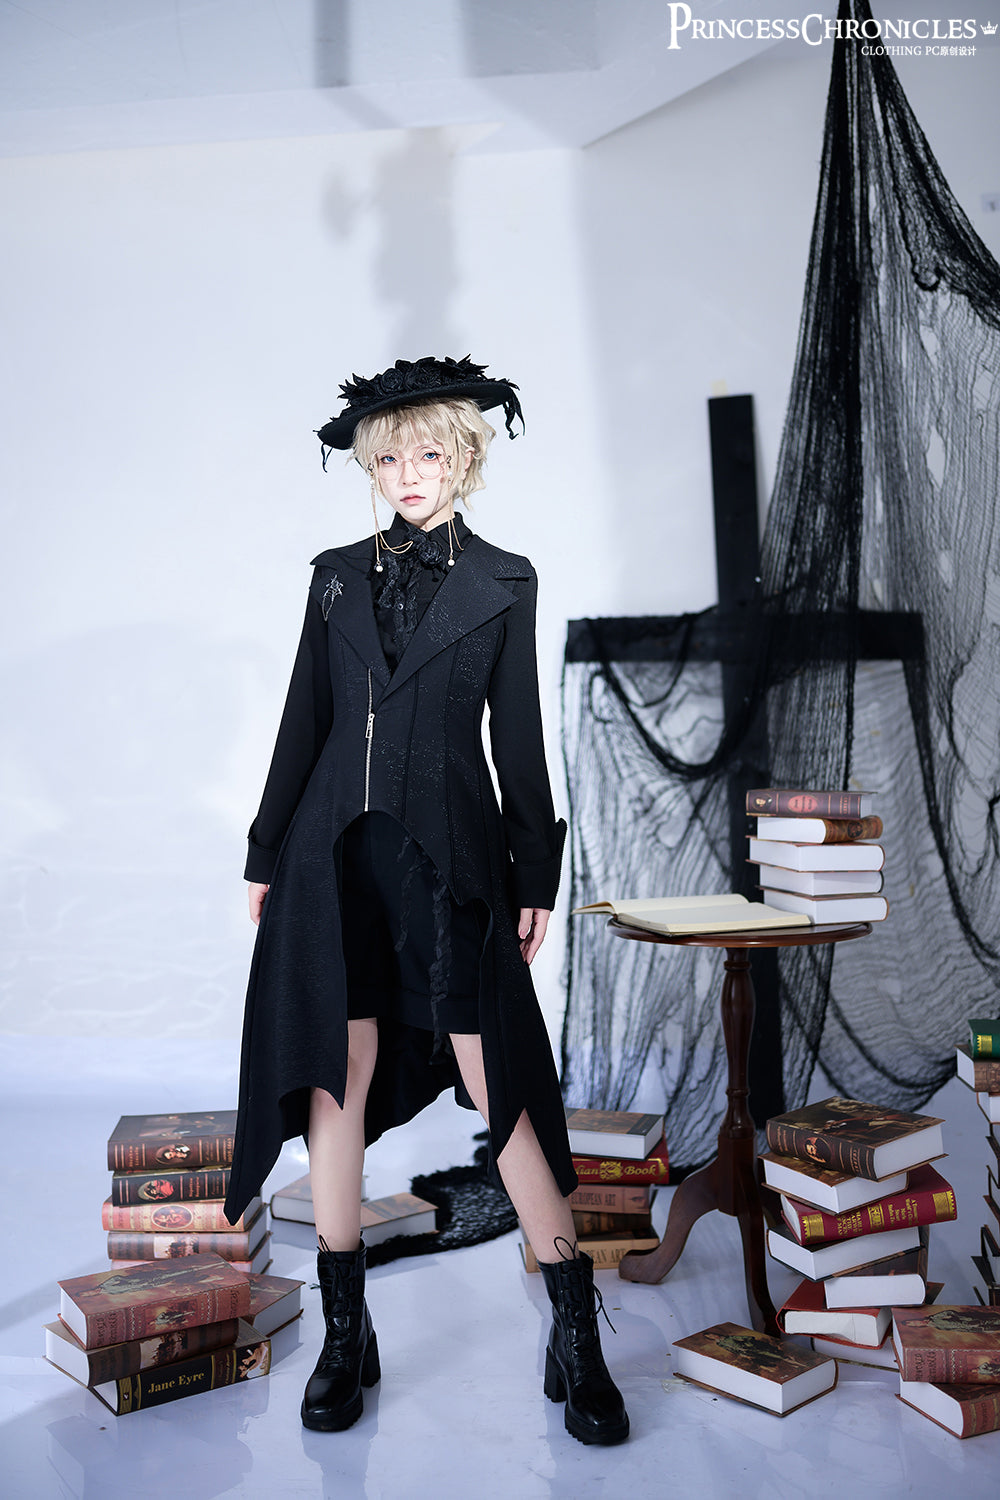 Princess Chronicles~Wind~Gothic Lolita handsome Black Long Vest   